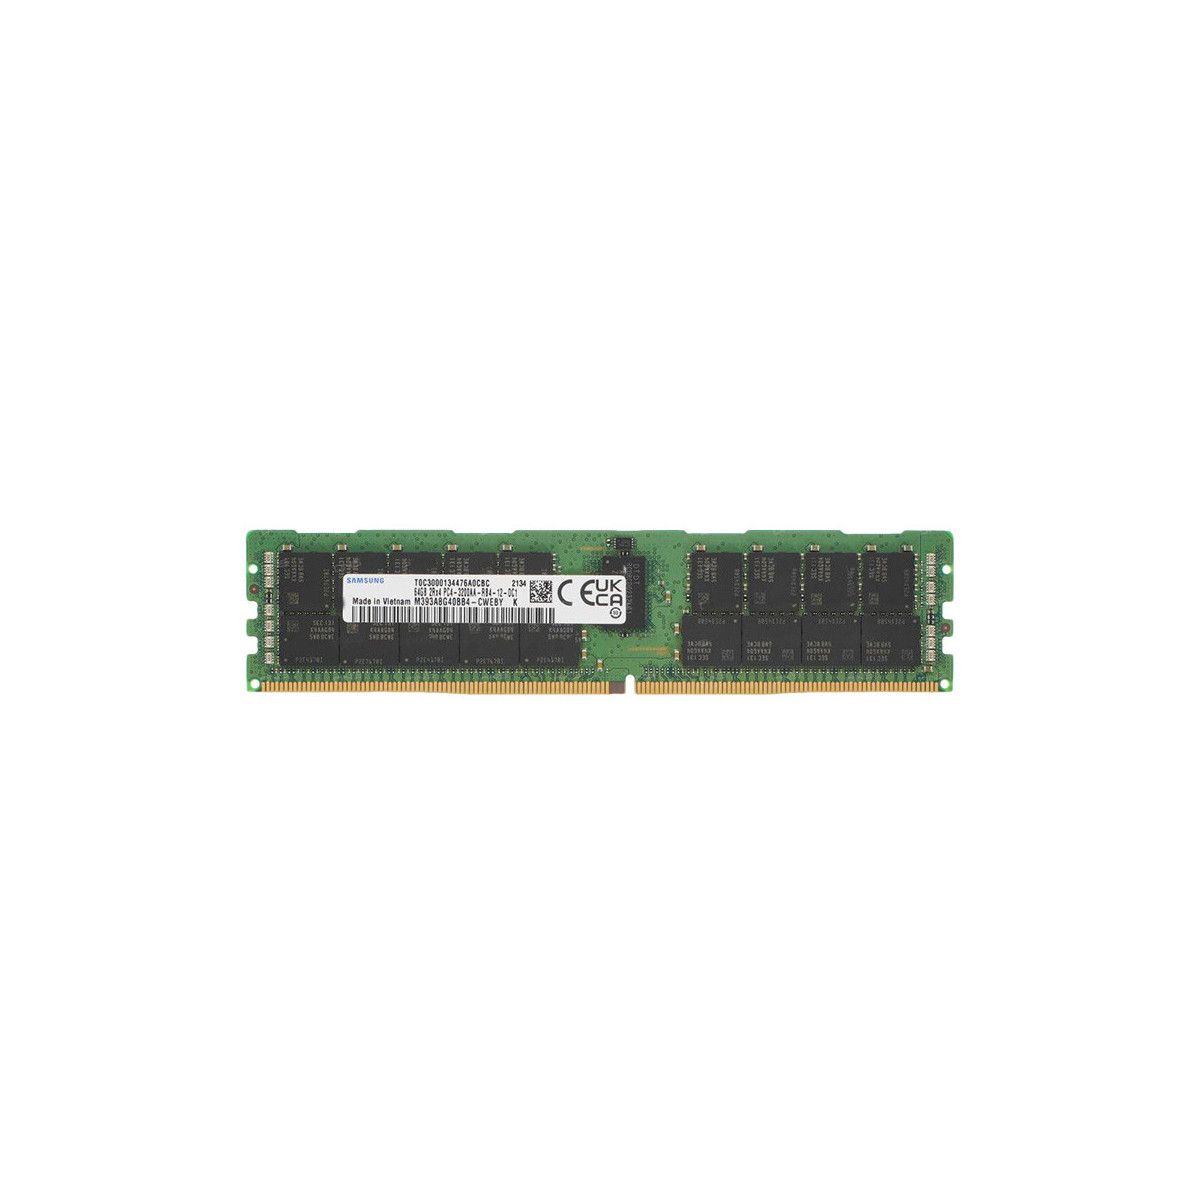 P07650-H21-MS - Memstar 1x 64GB DDR4-3200 RDIMM PC4-25600R - Mem-star Memorie OEM compatibilă 1 - Memstar 